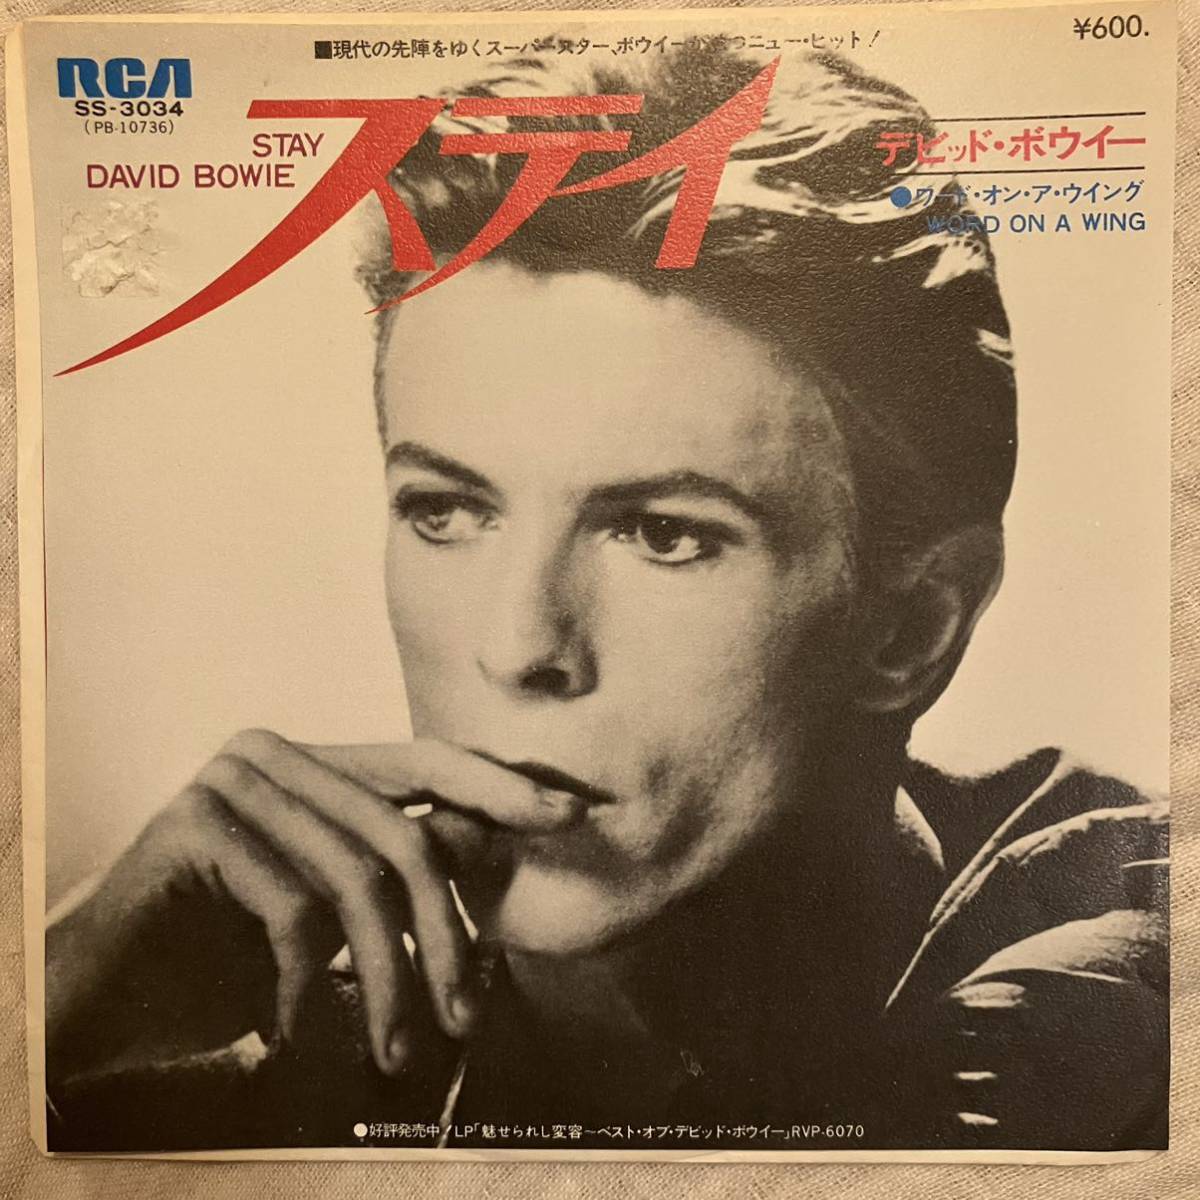 SALE 希少 美盤 デビッド・ボウイー David Bowie ステイ Stay SS-3034-